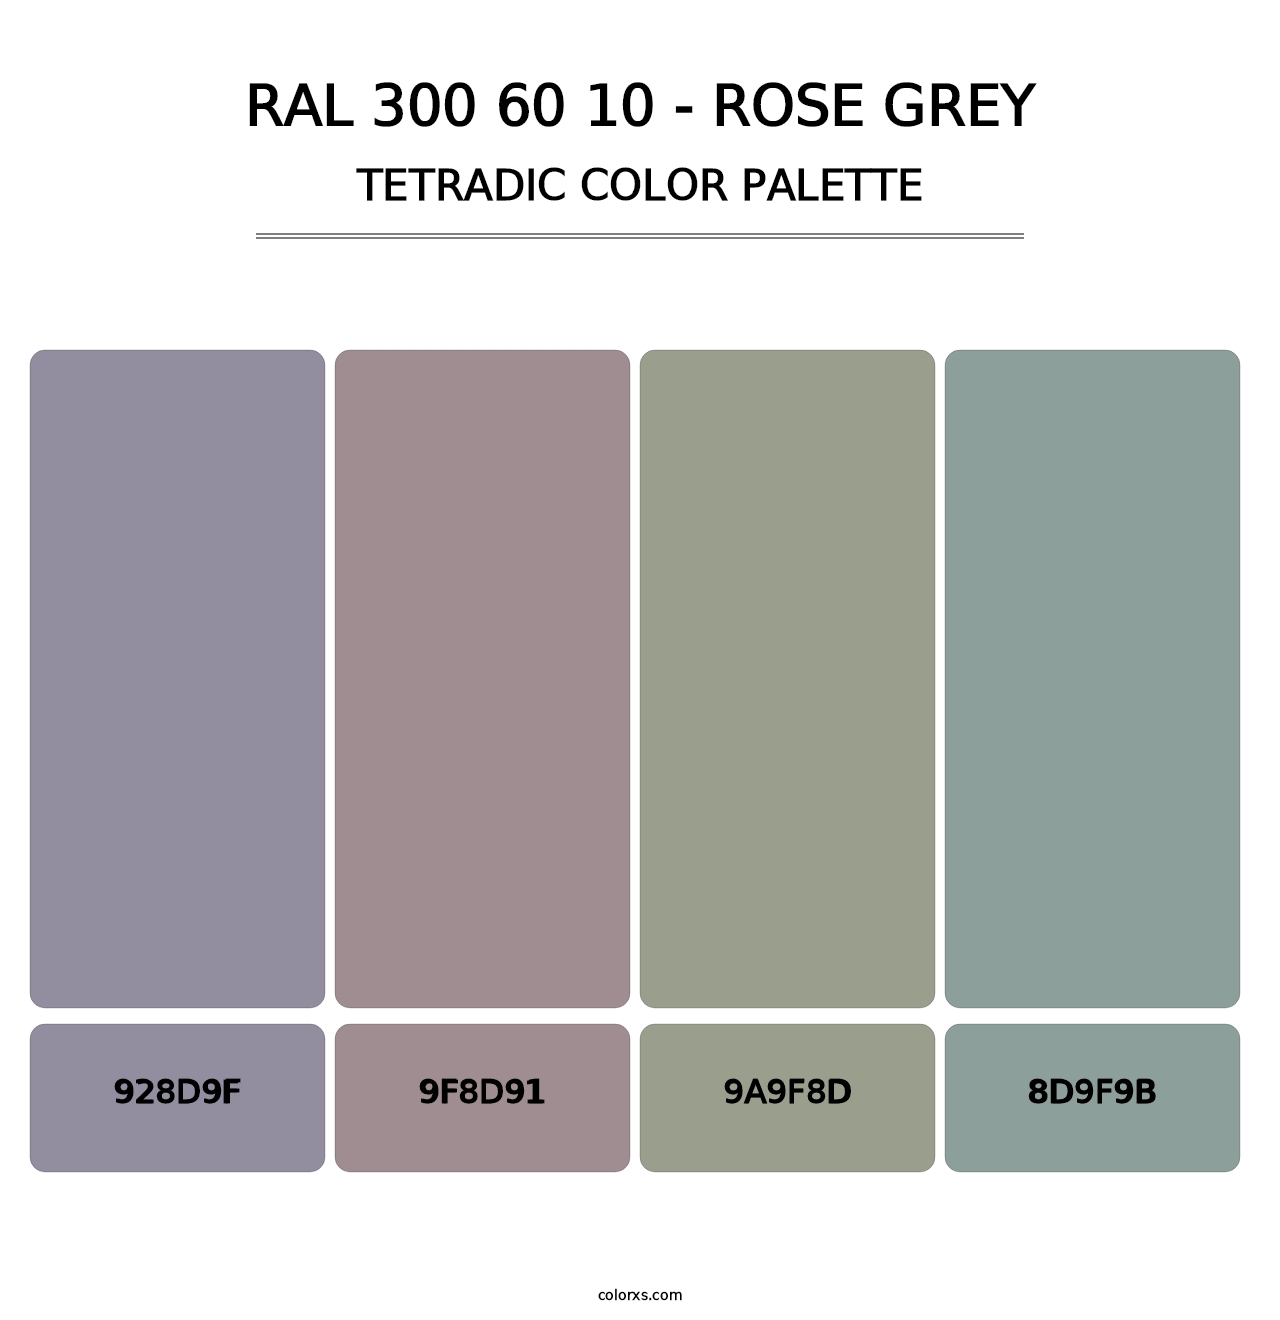 RAL 300 60 10 - Rose Grey - Tetradic Color Palette